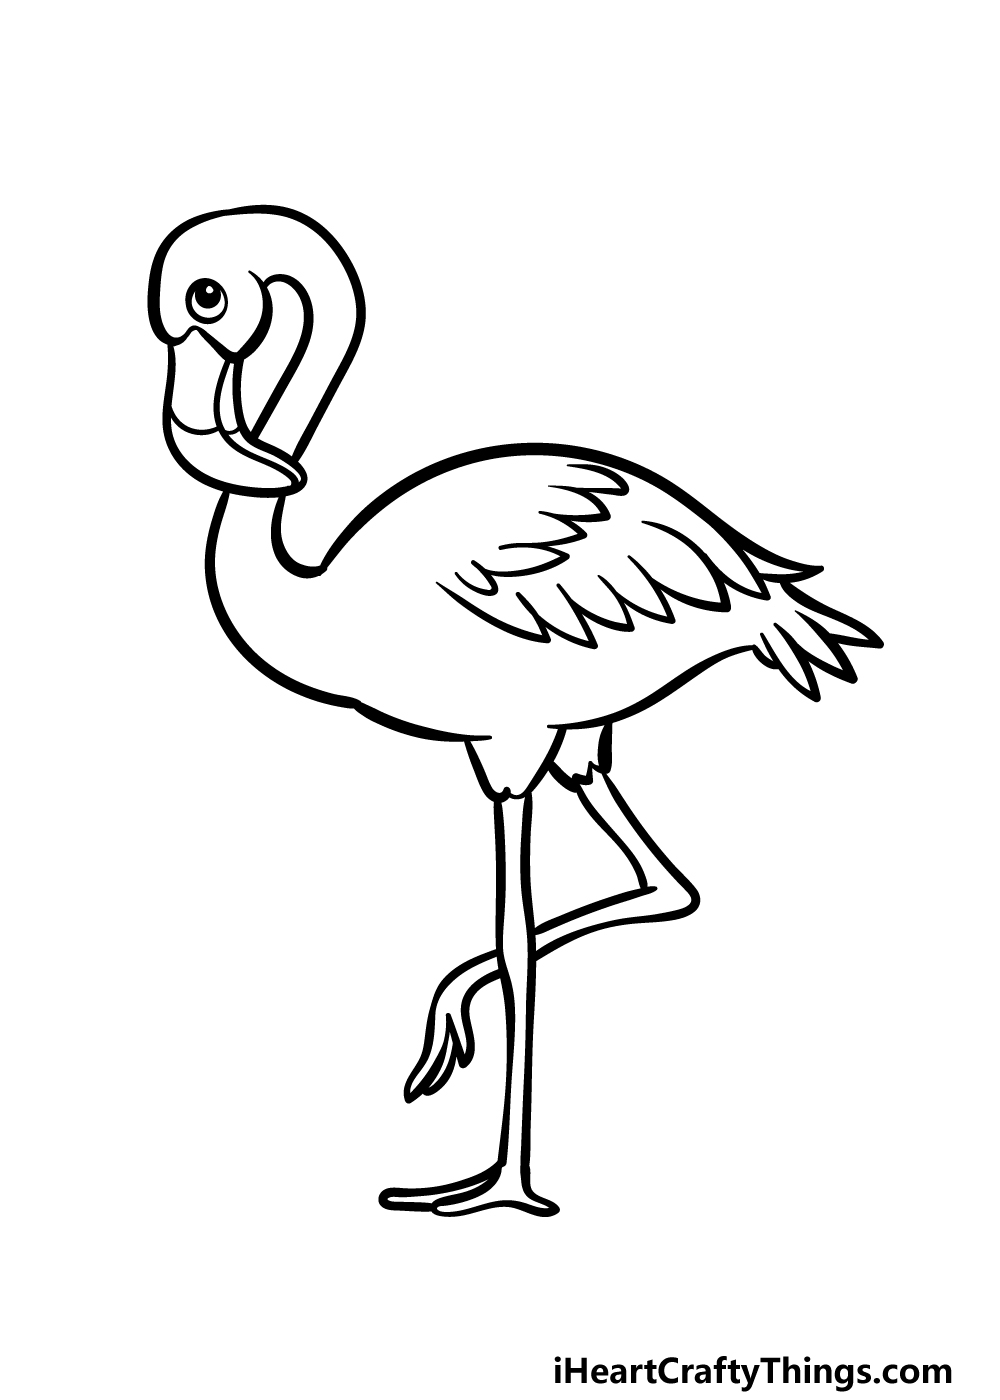 Cartoon Flamingo Drawing - How To Draw A Cartoon Flamingo Step By Step